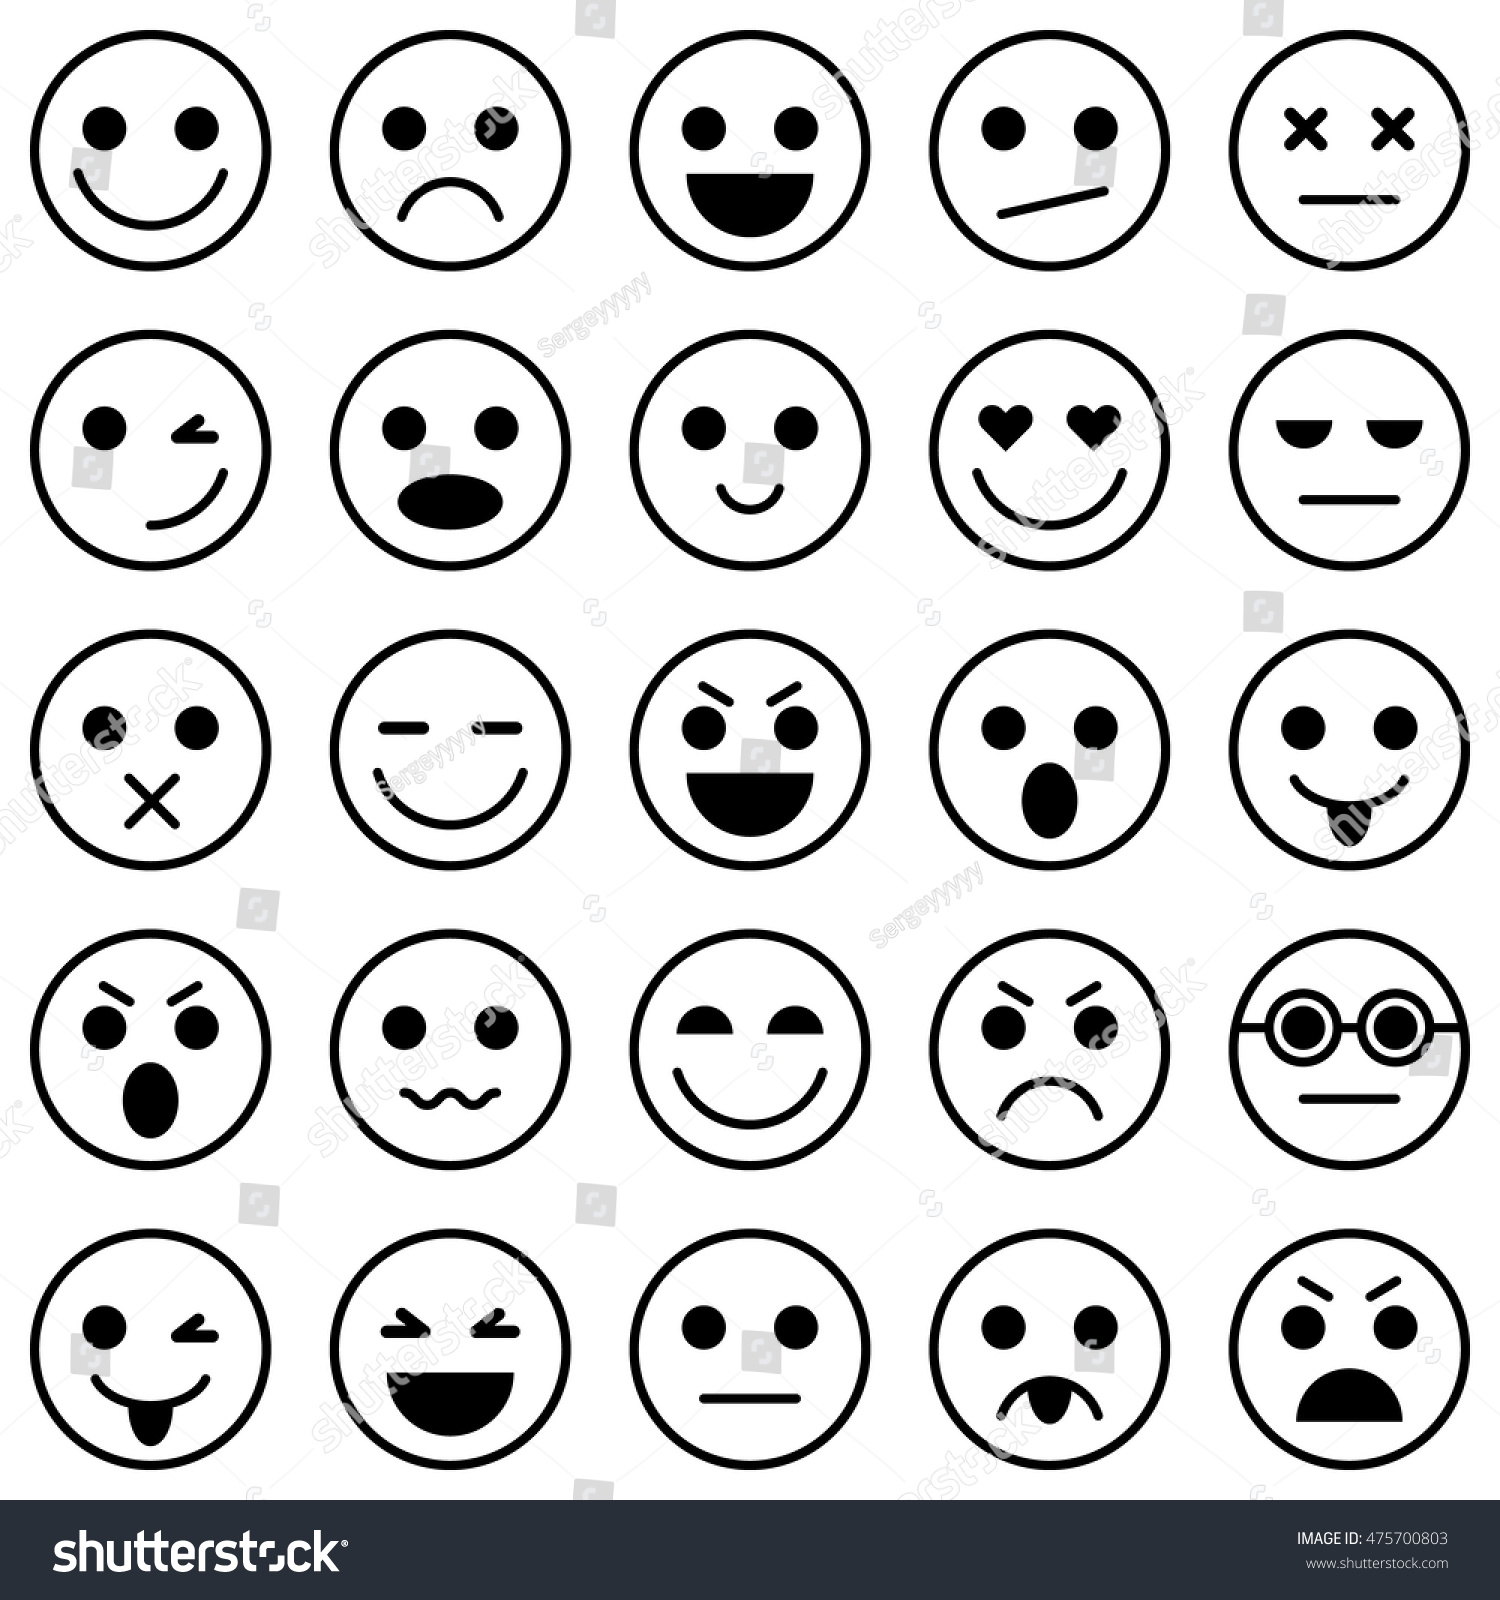 Kumpulan Contoh Set Of 25 Smiley Faces Men Characters Stock Vector